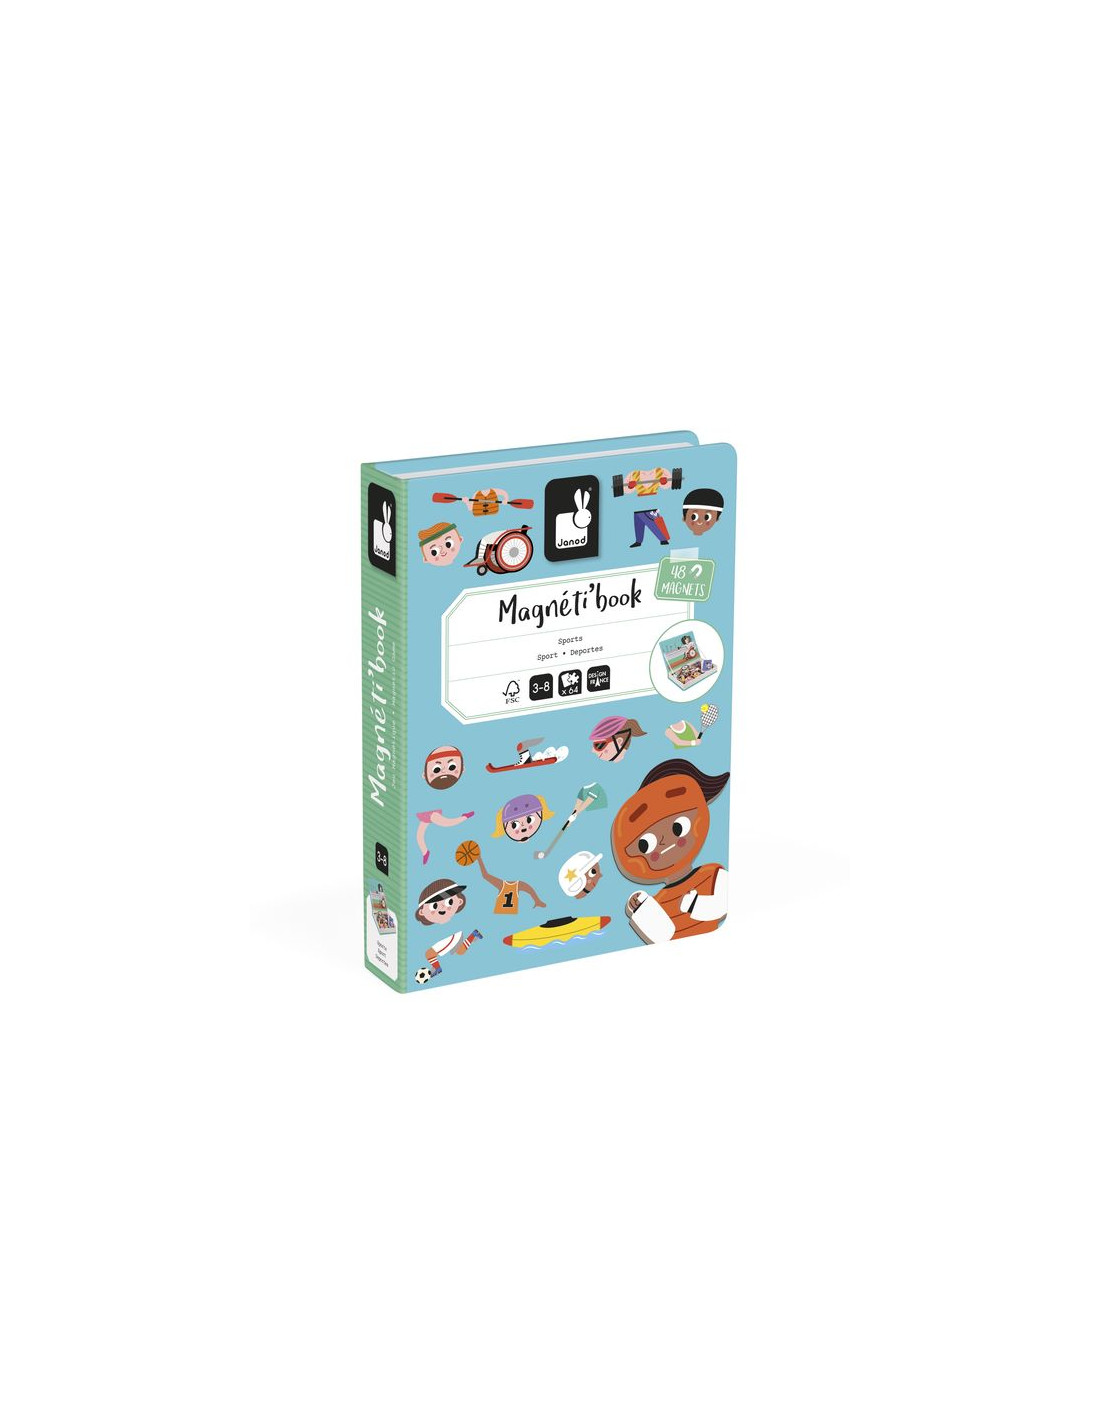 Acheter le jeu Magnéti Book Sports de Janod - Jeu éducatif Boutique  Tropfastoche.com